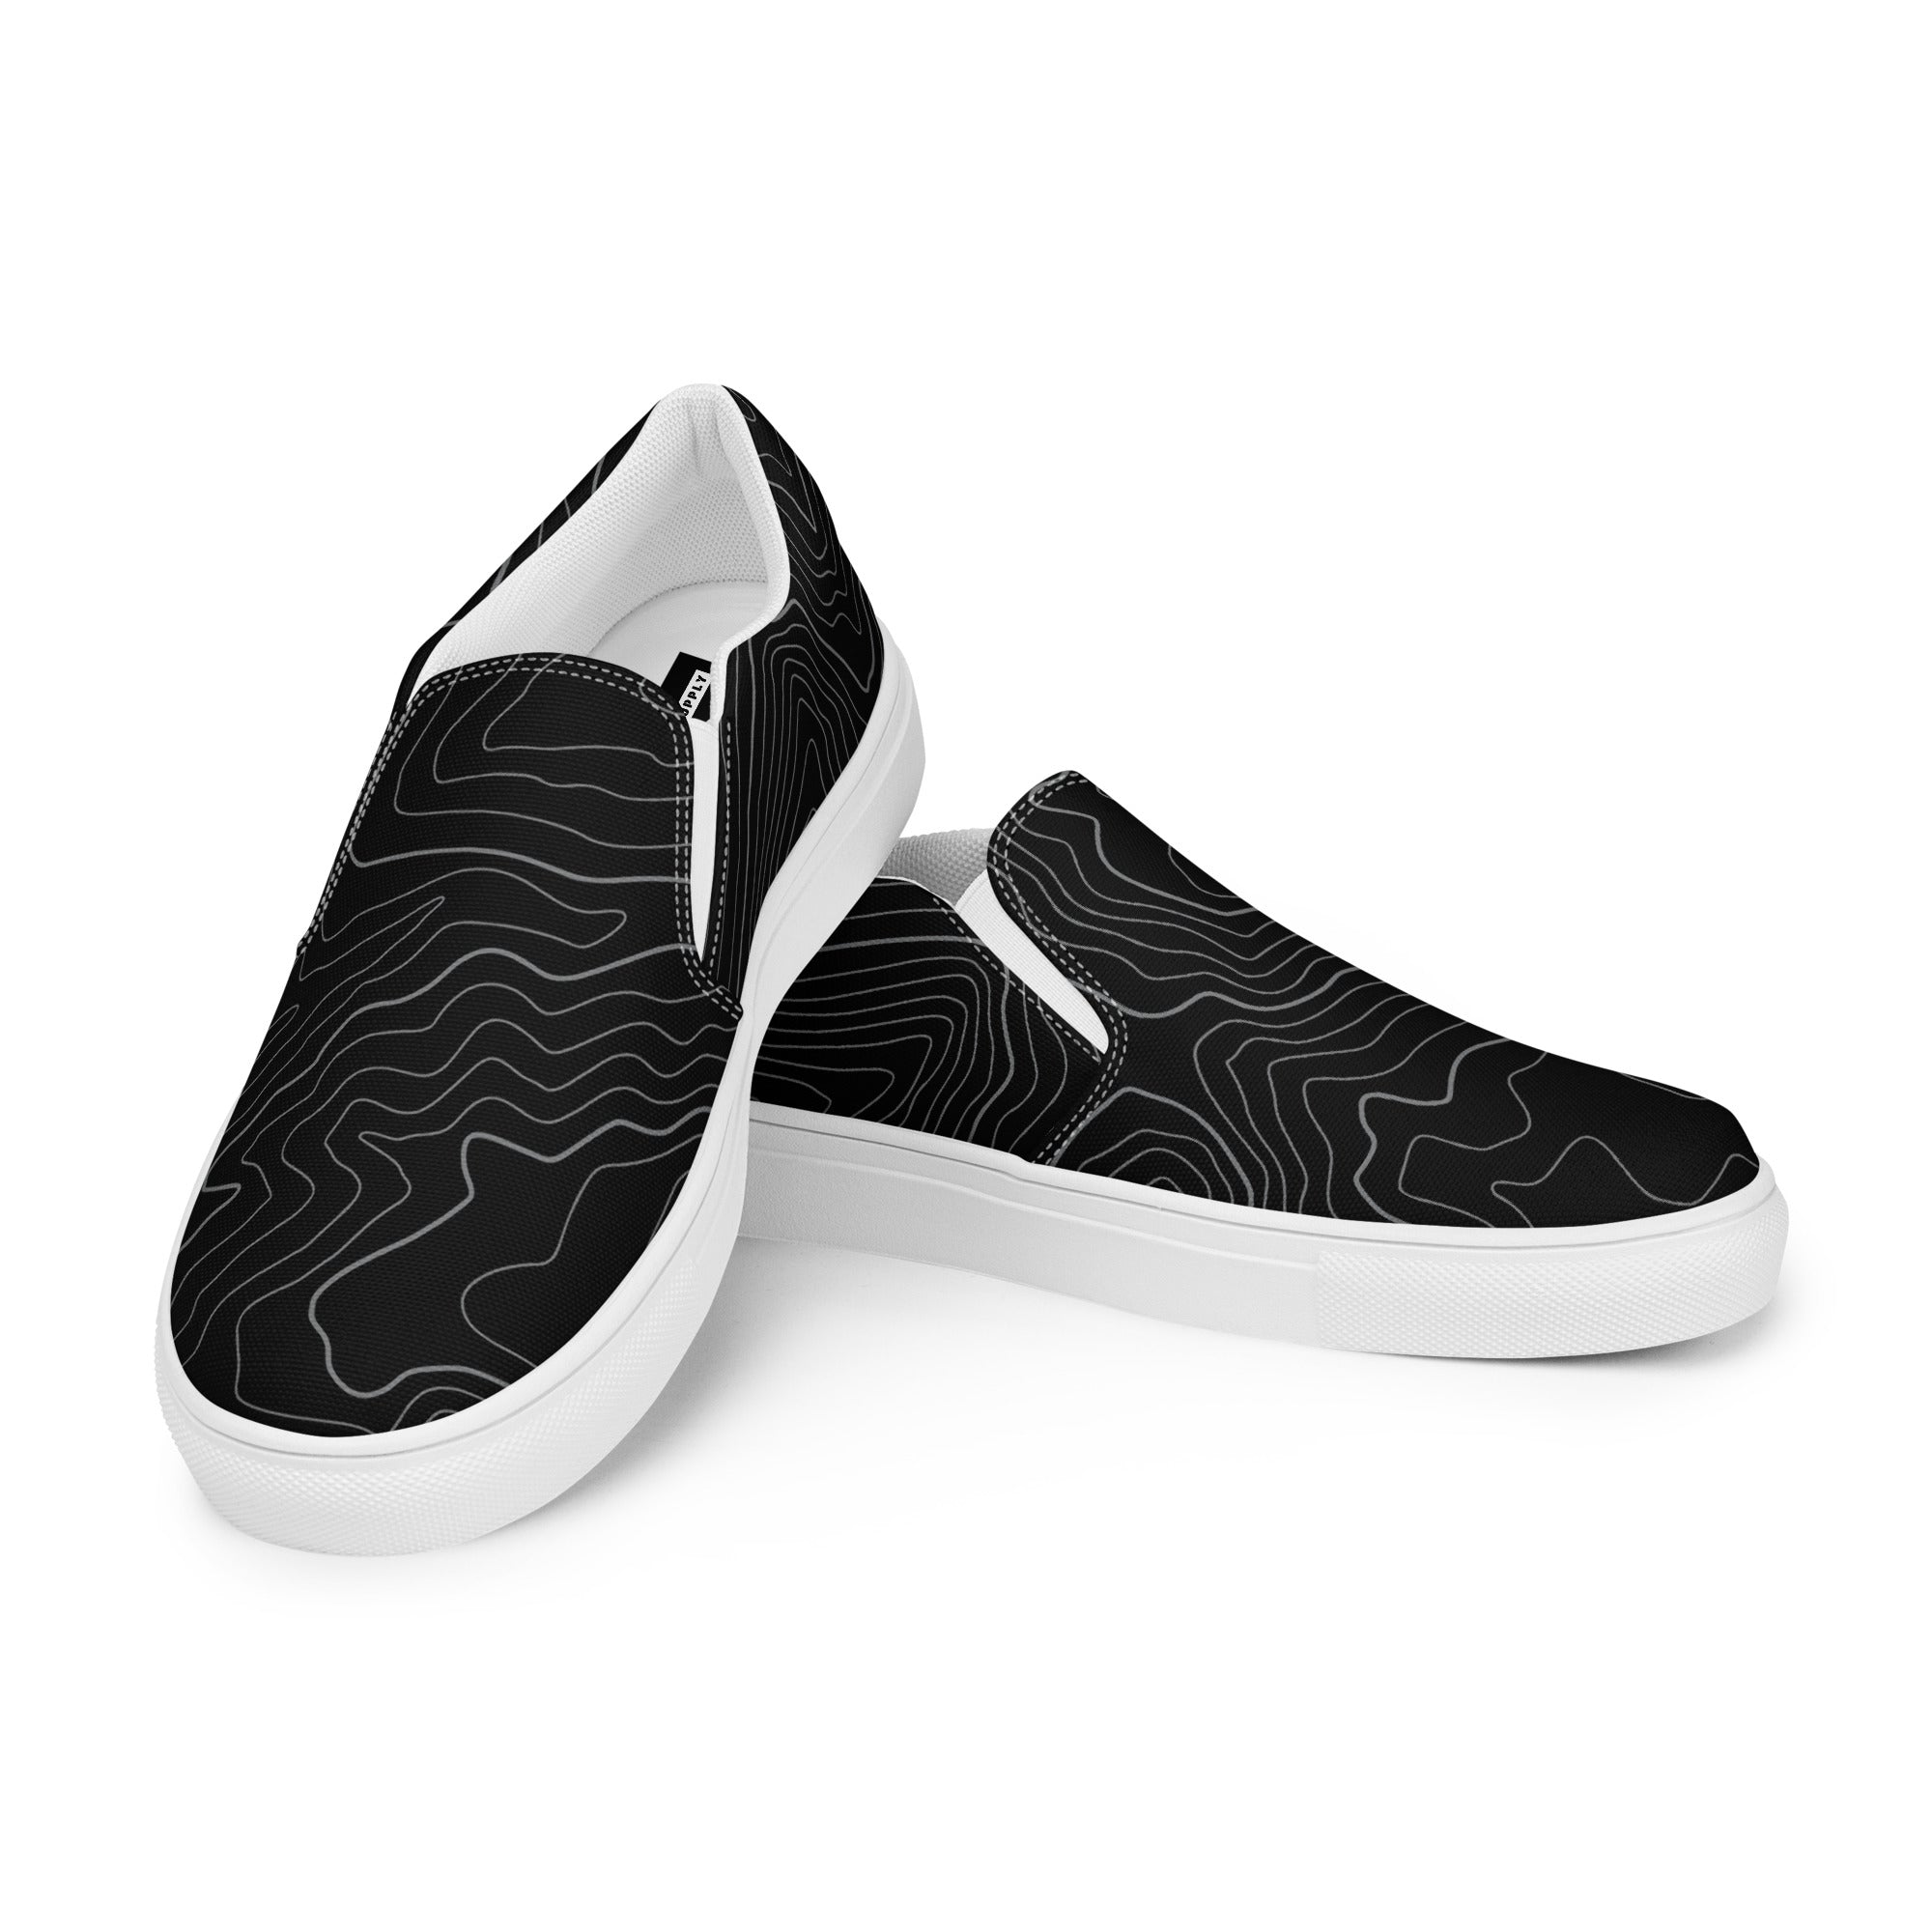 Men’s "Black Topo" Slip-On Shoes